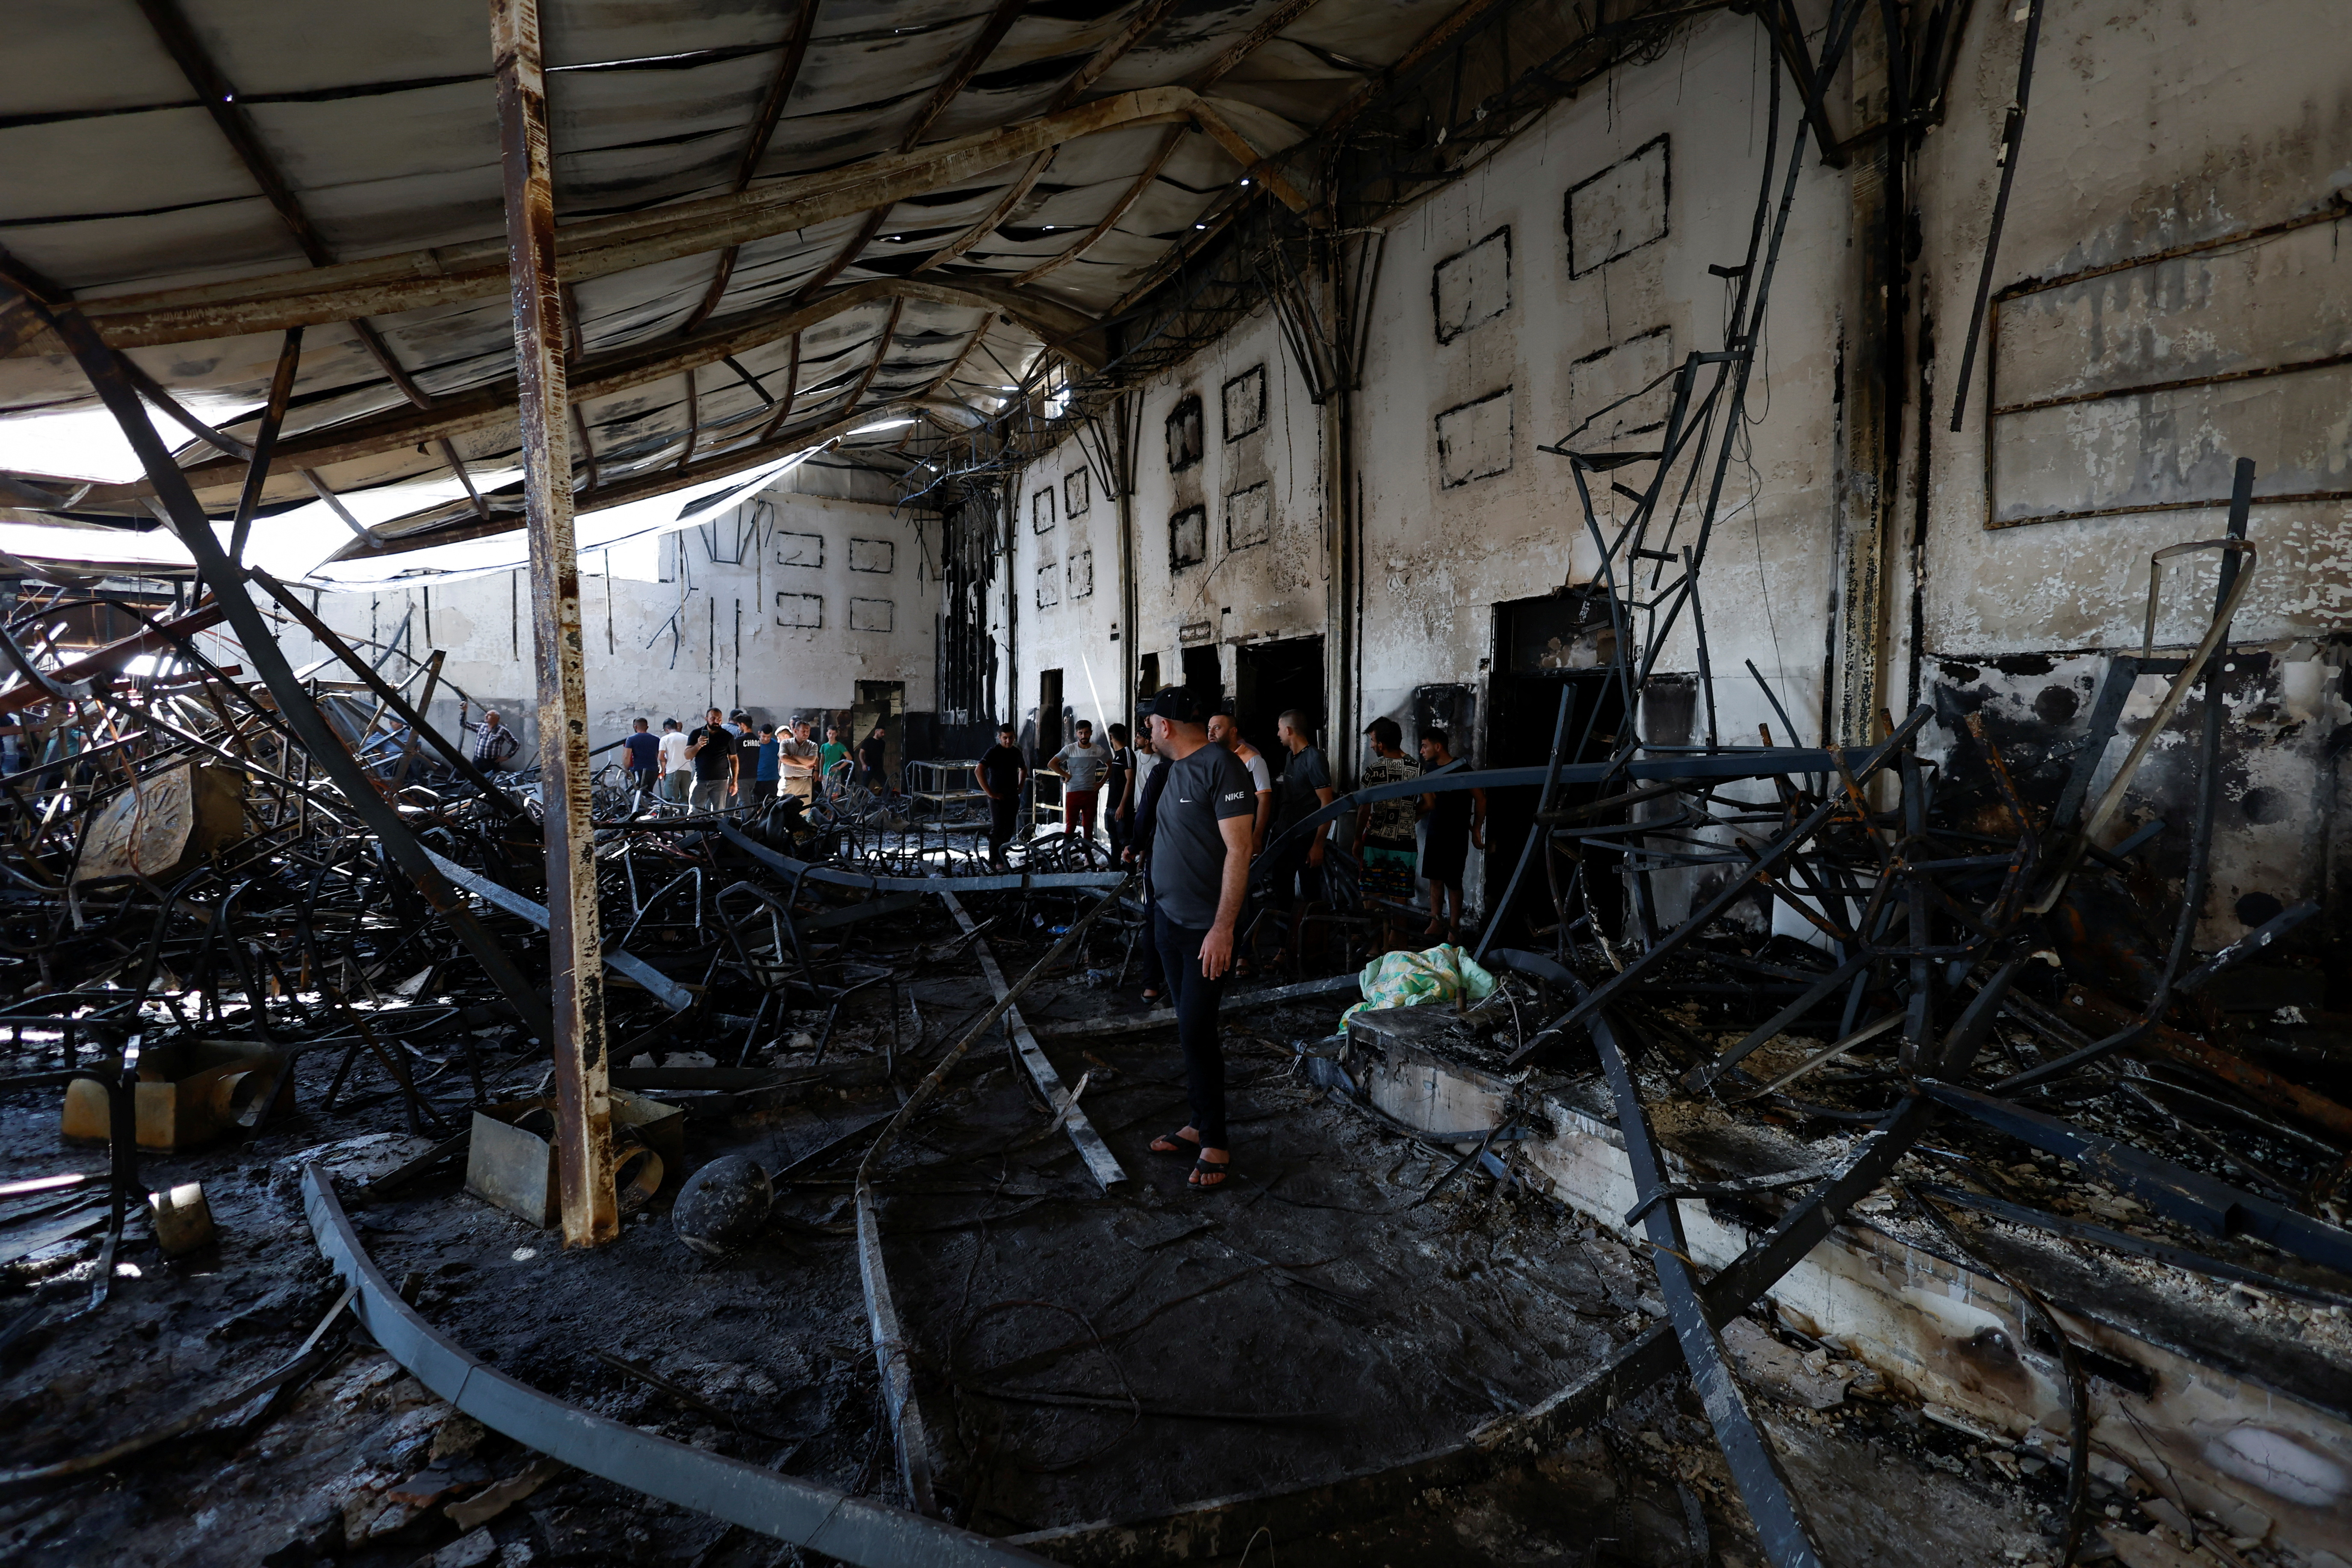 Fire rips through Iraqi wedding hall, killing around 100 in shock to  Christian community